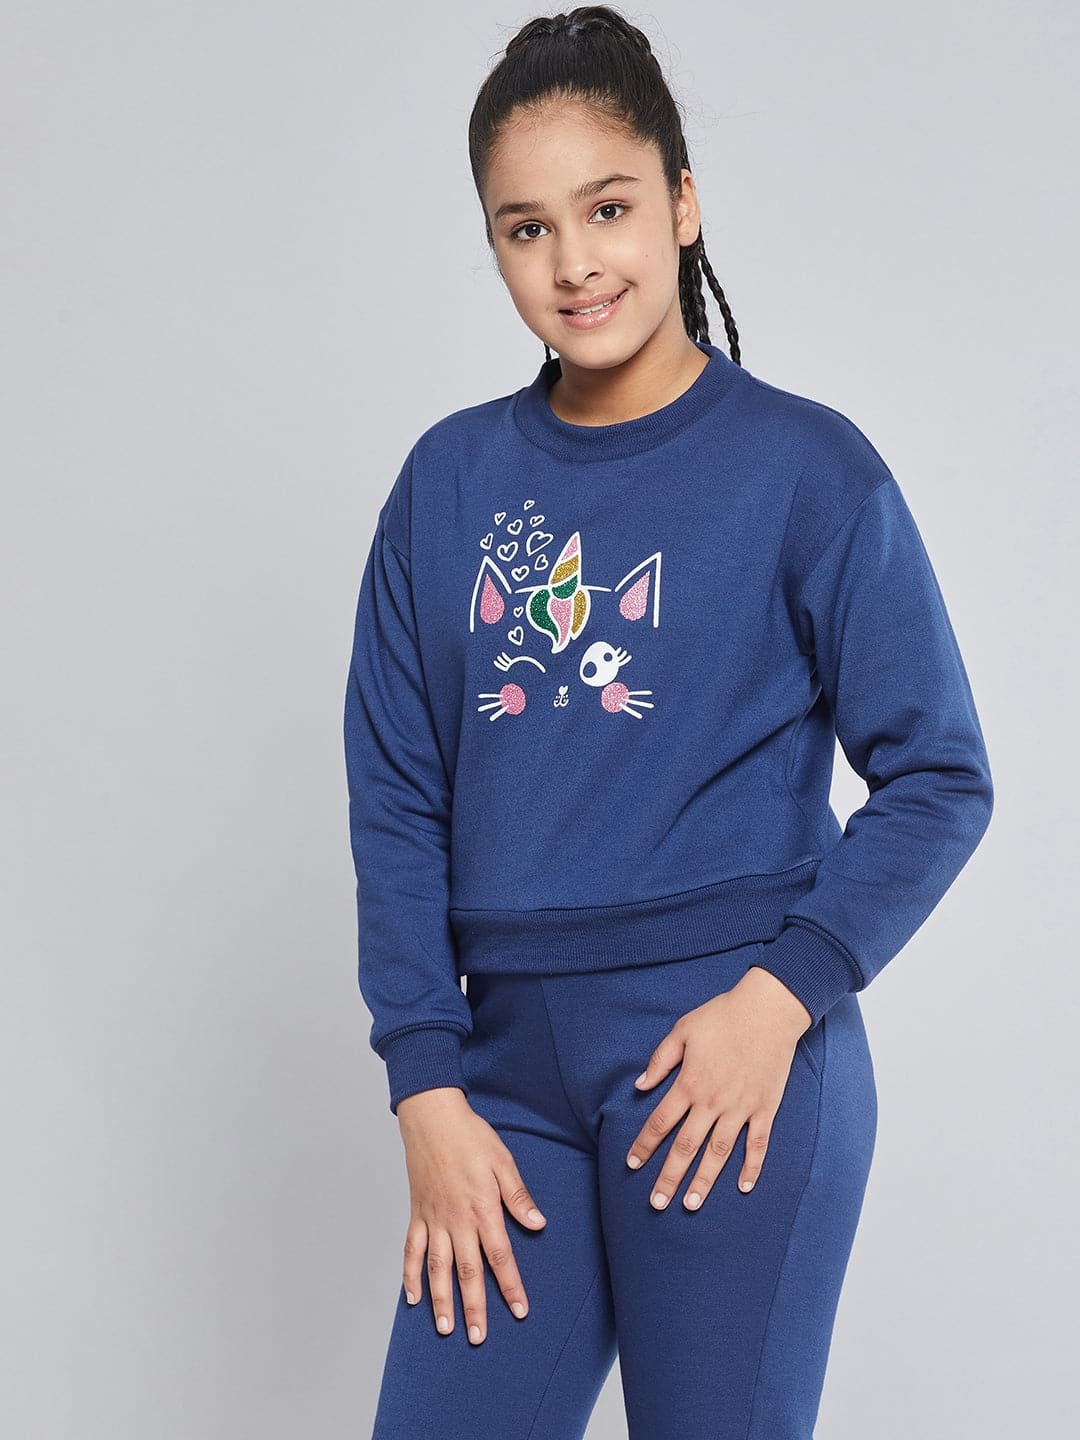 Girls Blue Fleece Glitter Print Sweatshirt - Lyush Kids